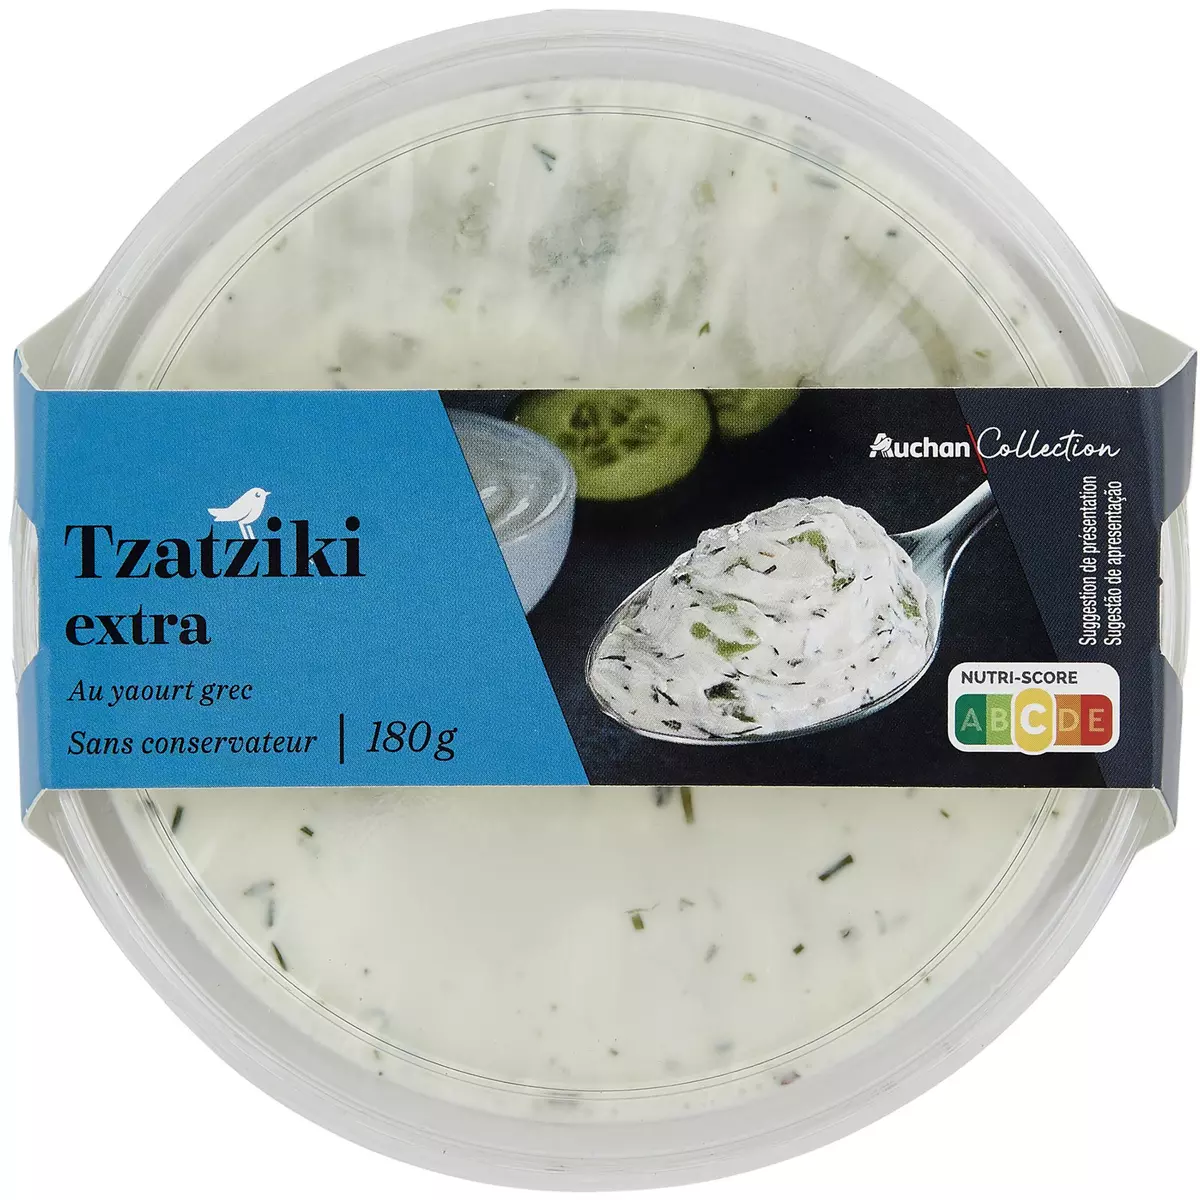 AUCHAN COLLECTION Tzatziki extra au yaourt grec 180g